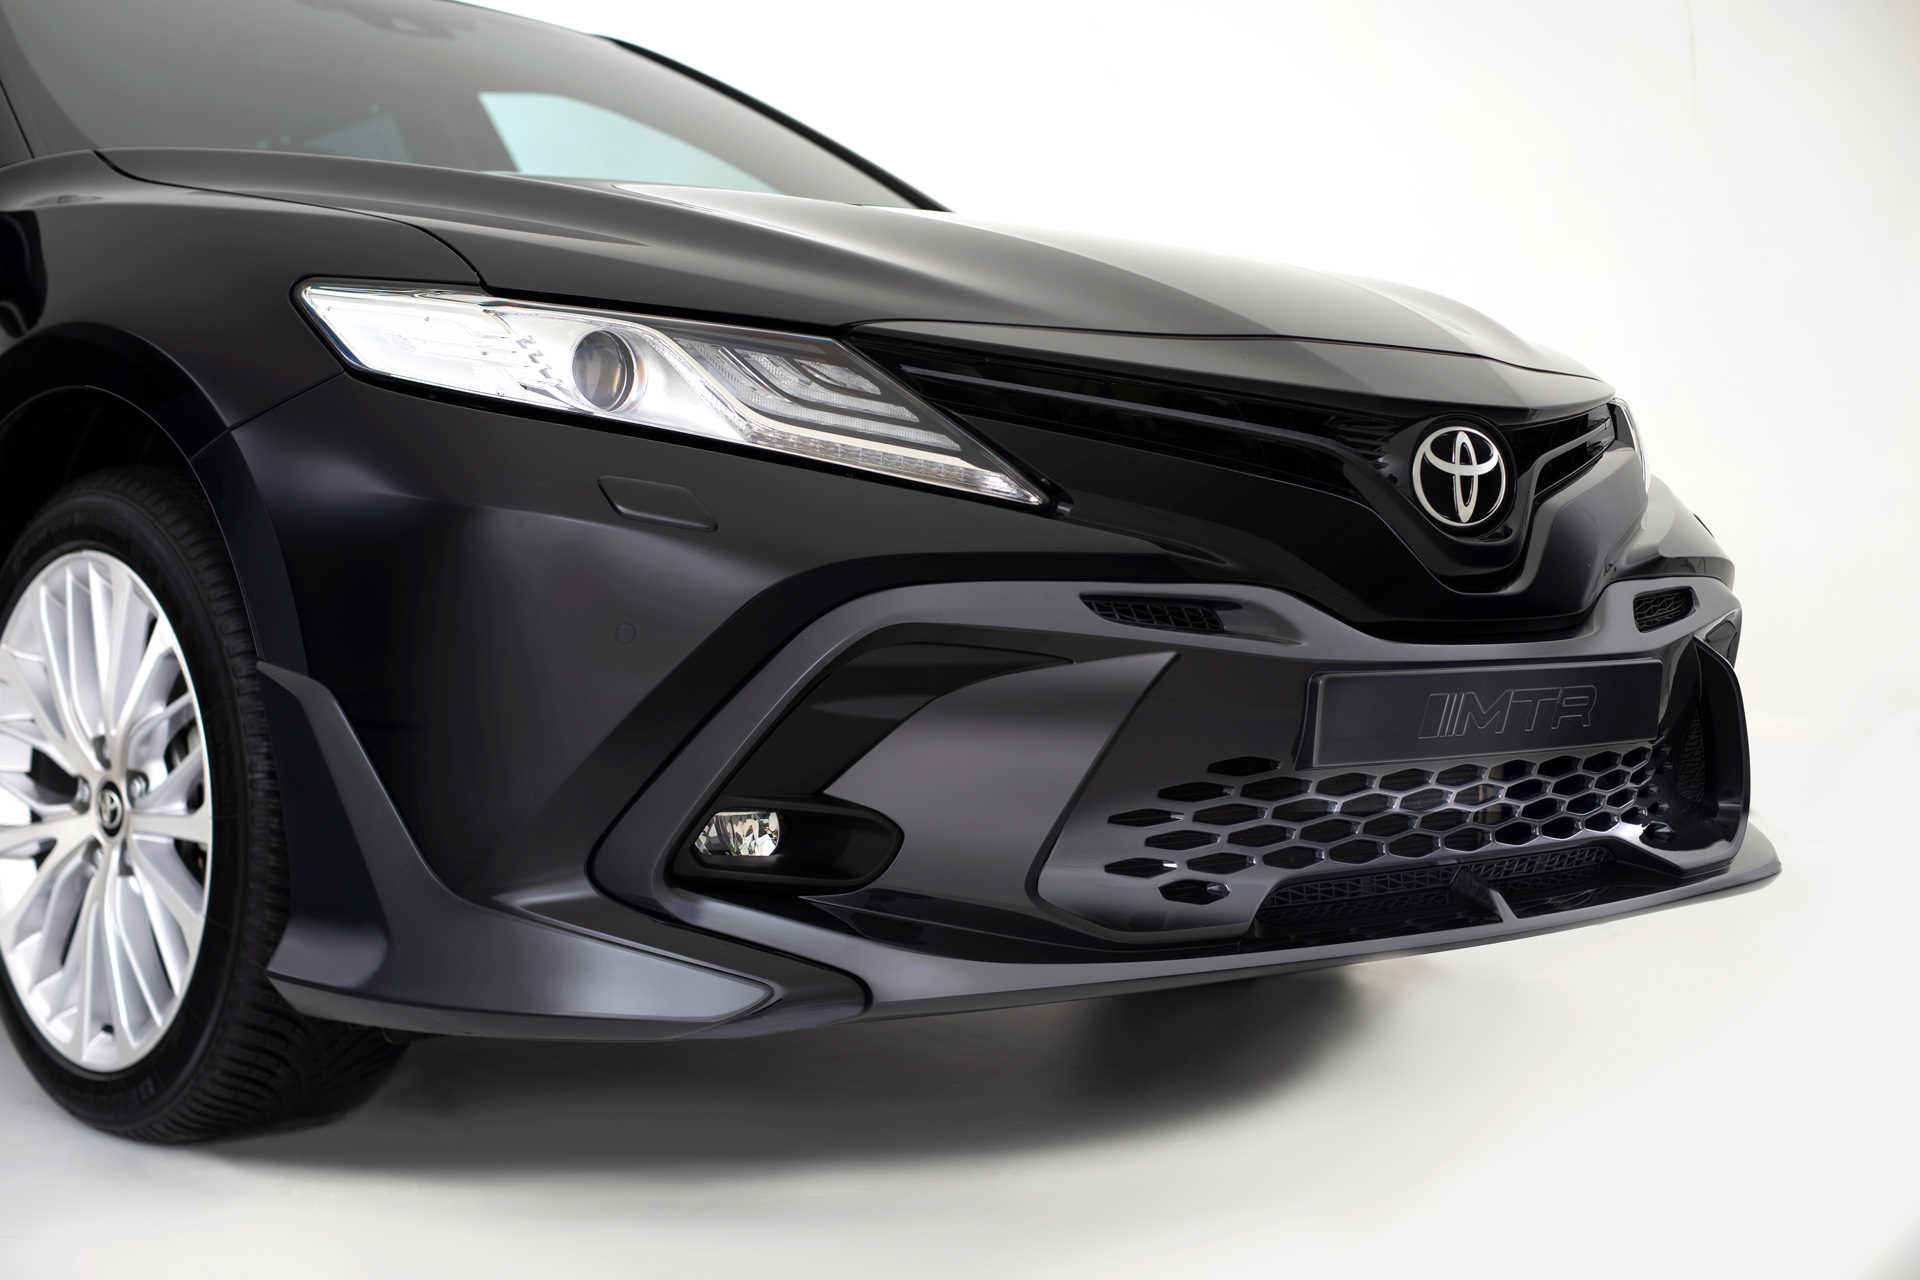 Body kit set MTR Design for Toyota Camry XV70 for 3.5 L modification